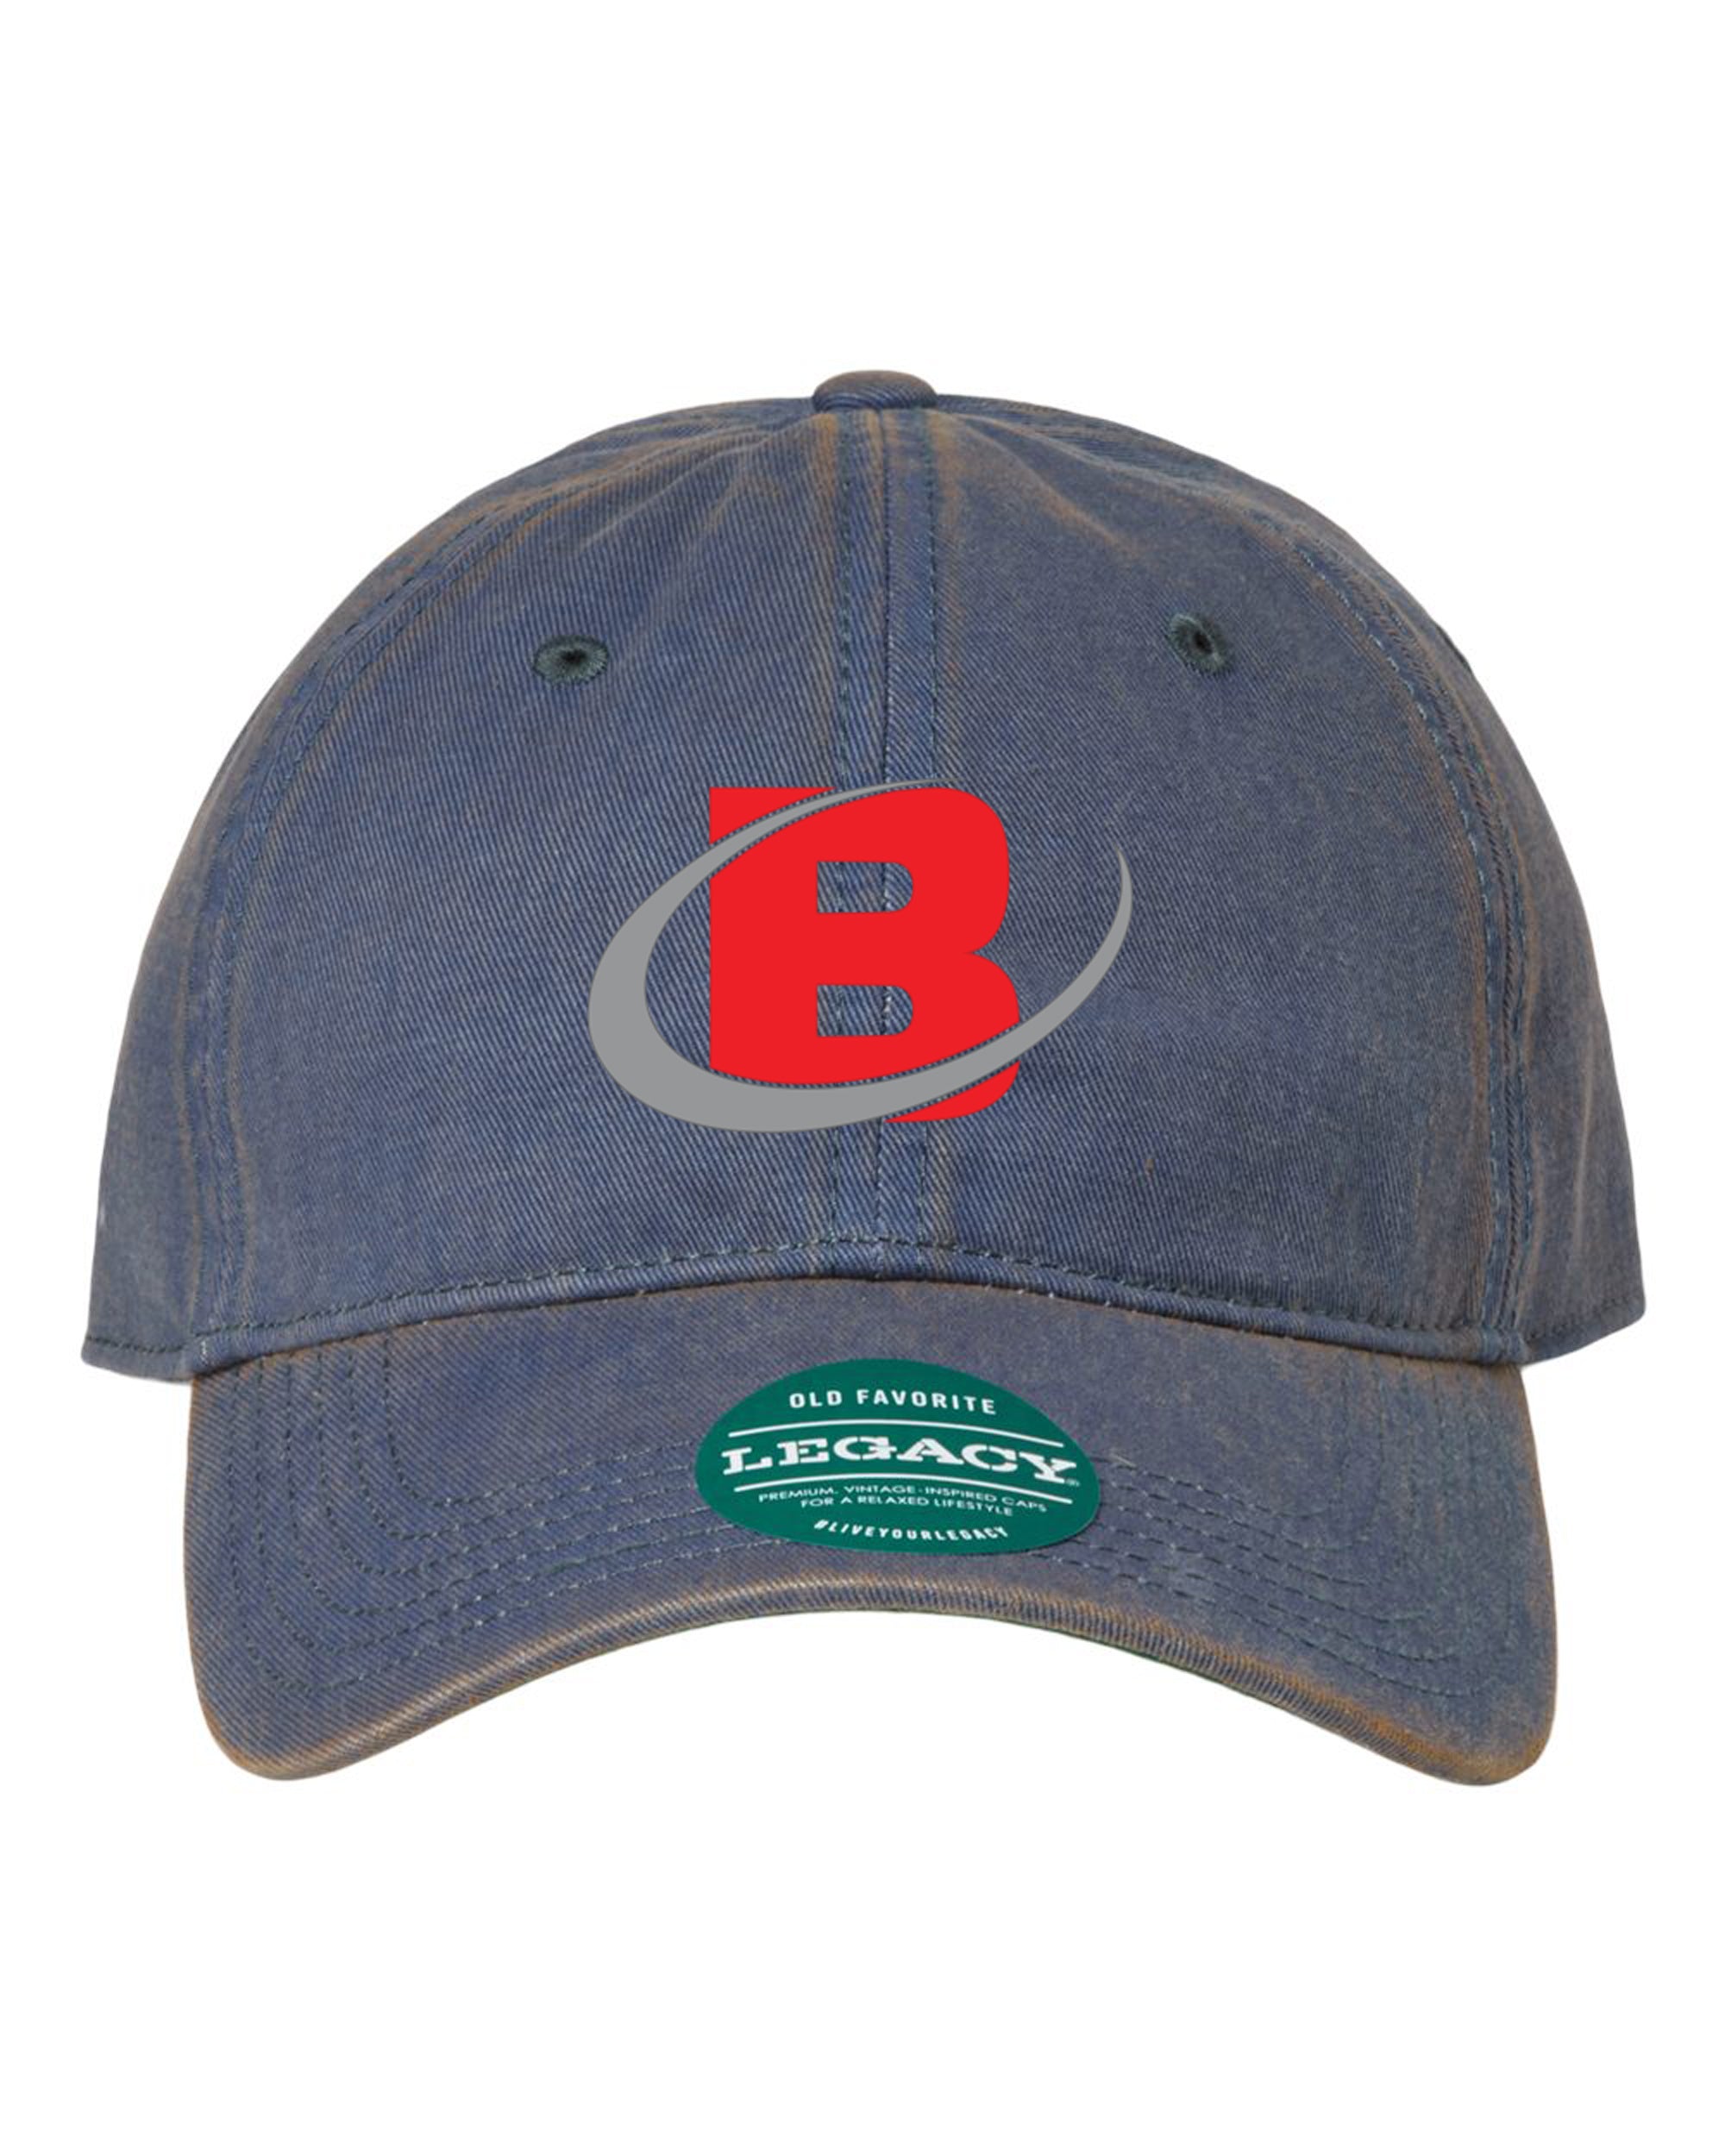 Bowman Excavating - Unstructured Hat